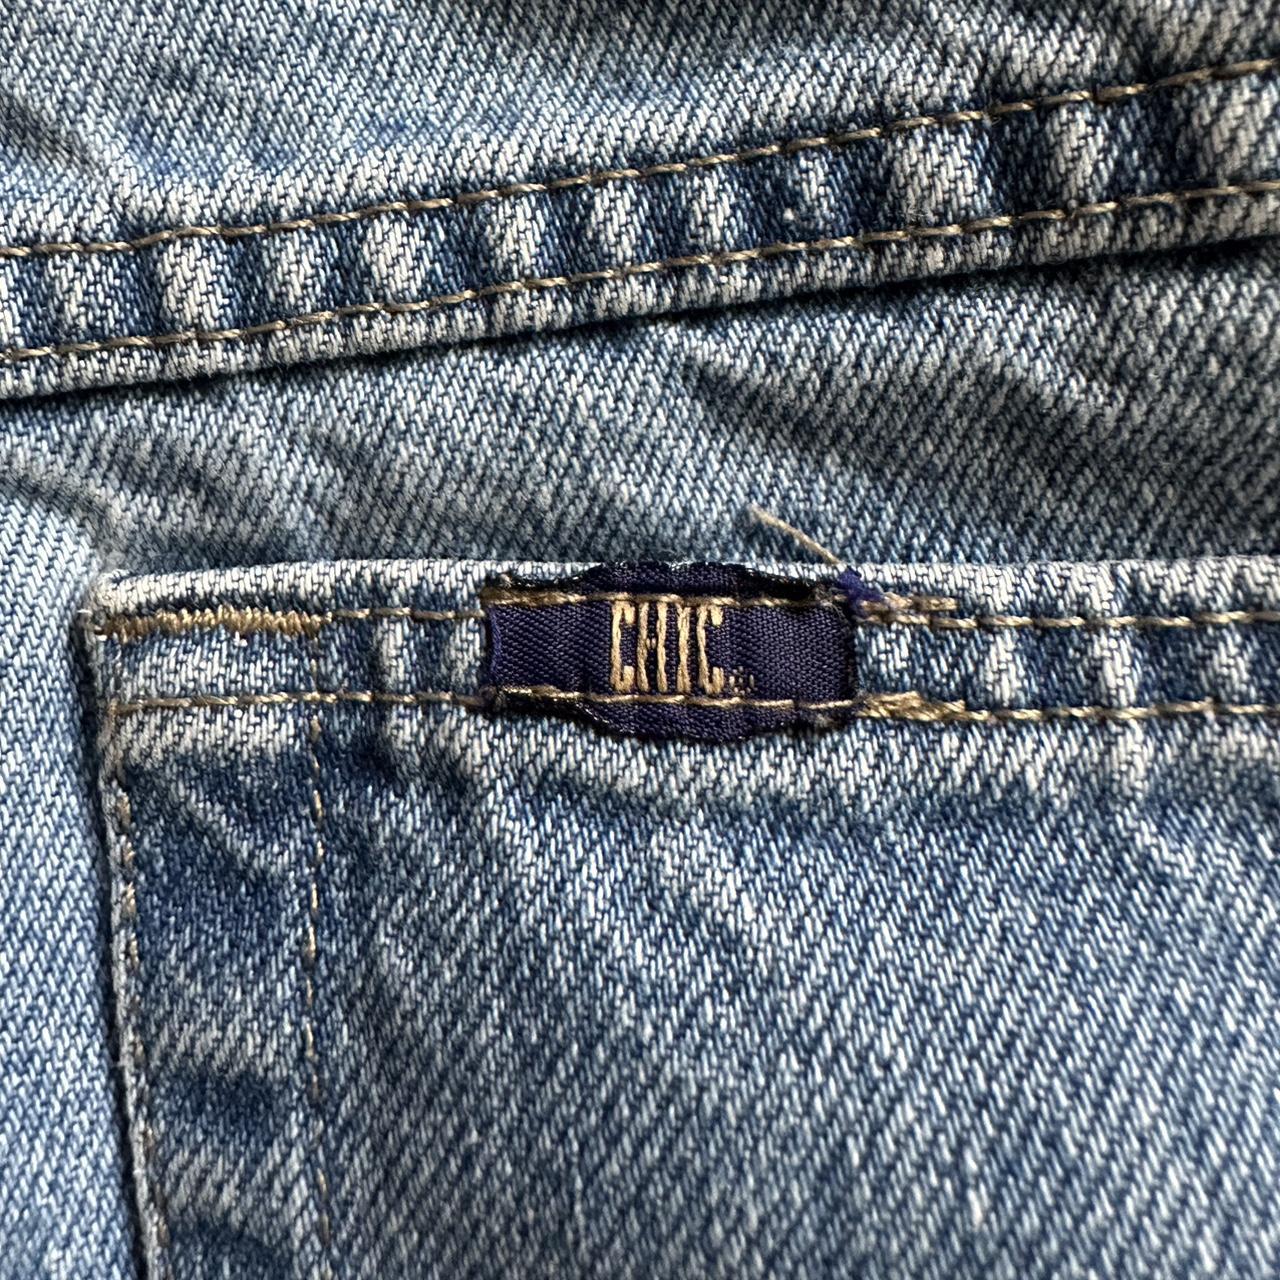 Chic Women's Blue Jeans (5)